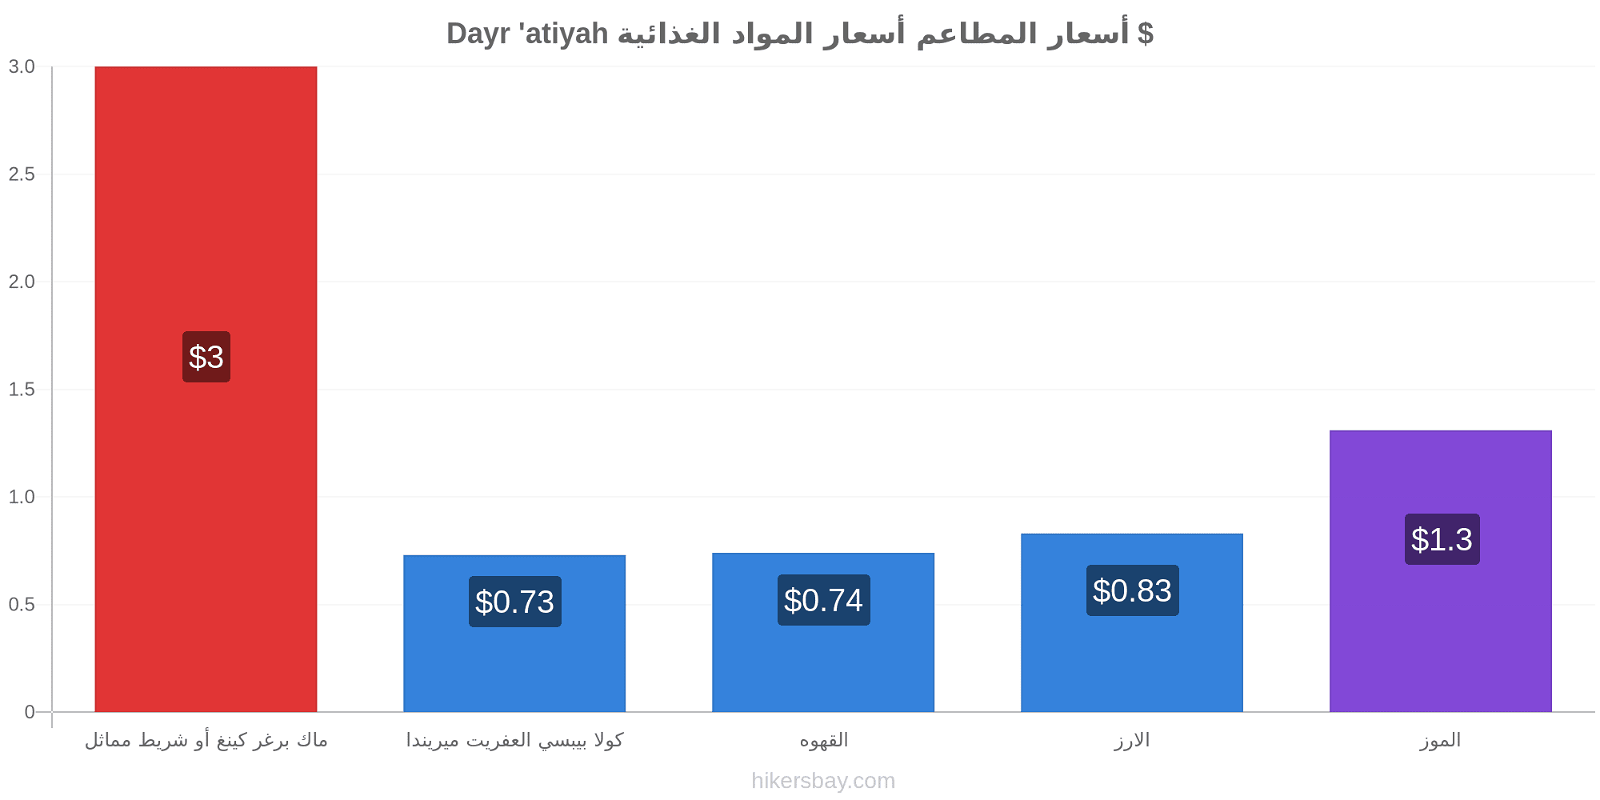 Dayr 'atiyah تغييرات الأسعار hikersbay.com